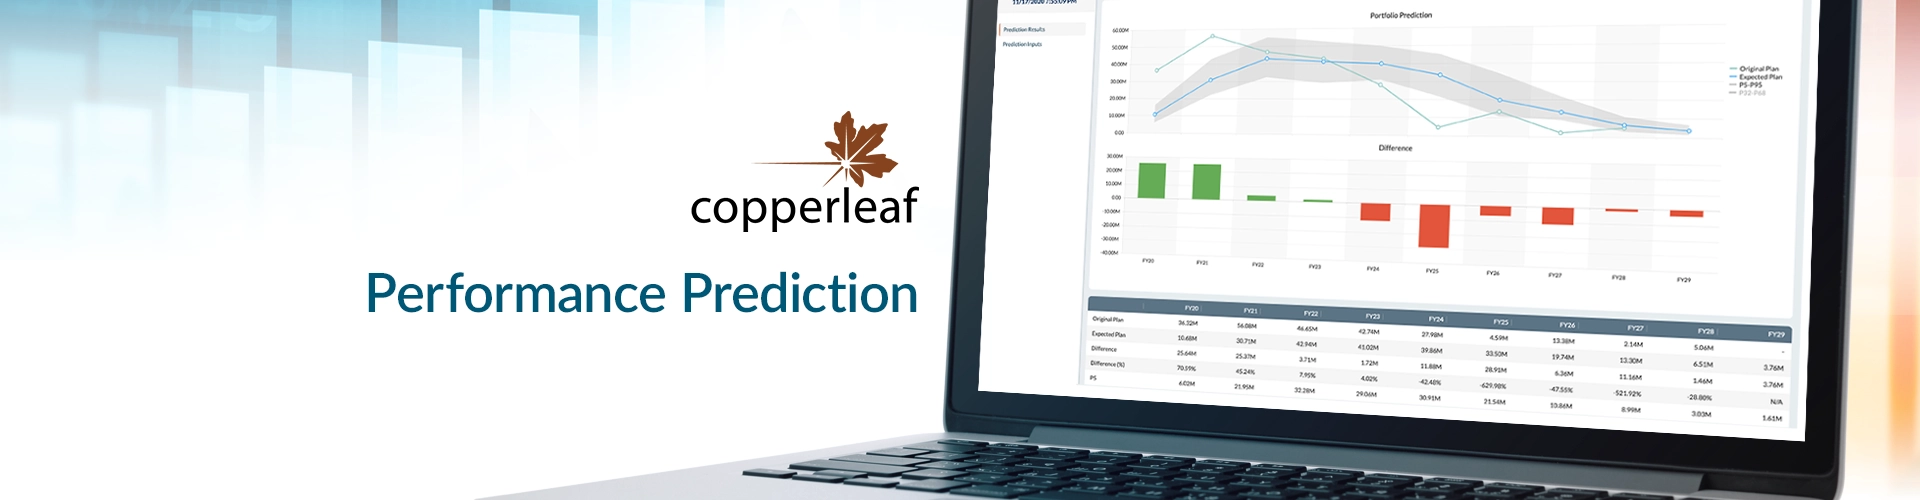 Blog Hero Performance Prediction Launch - Copperleaf Decision Analytics